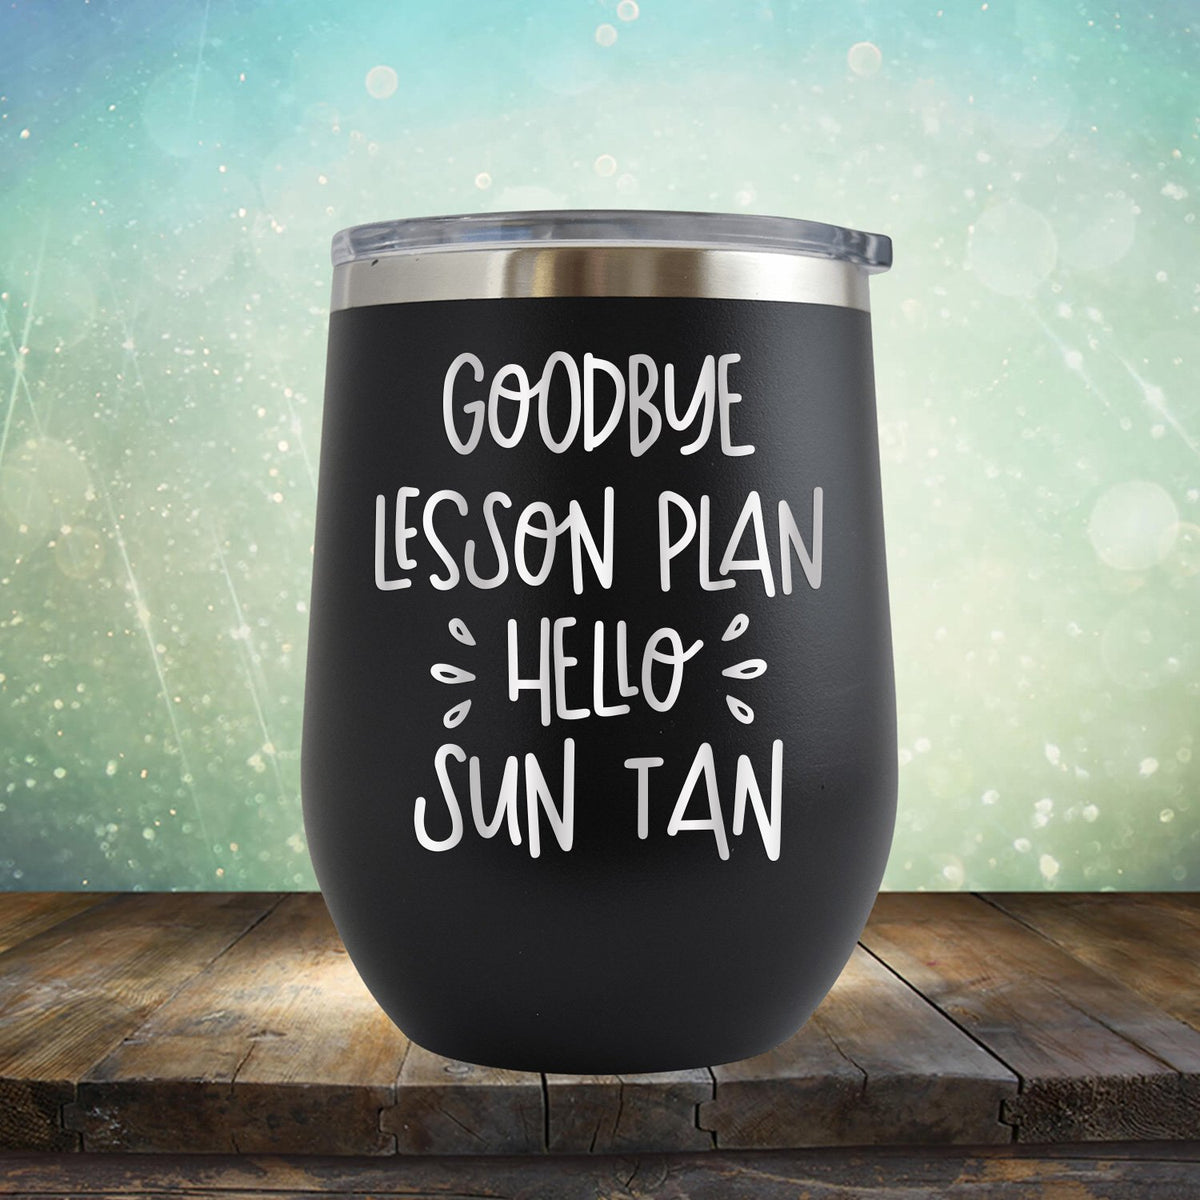 Goodbye Lesson Plan Hello Sun Tan - Stemless Wine Cup